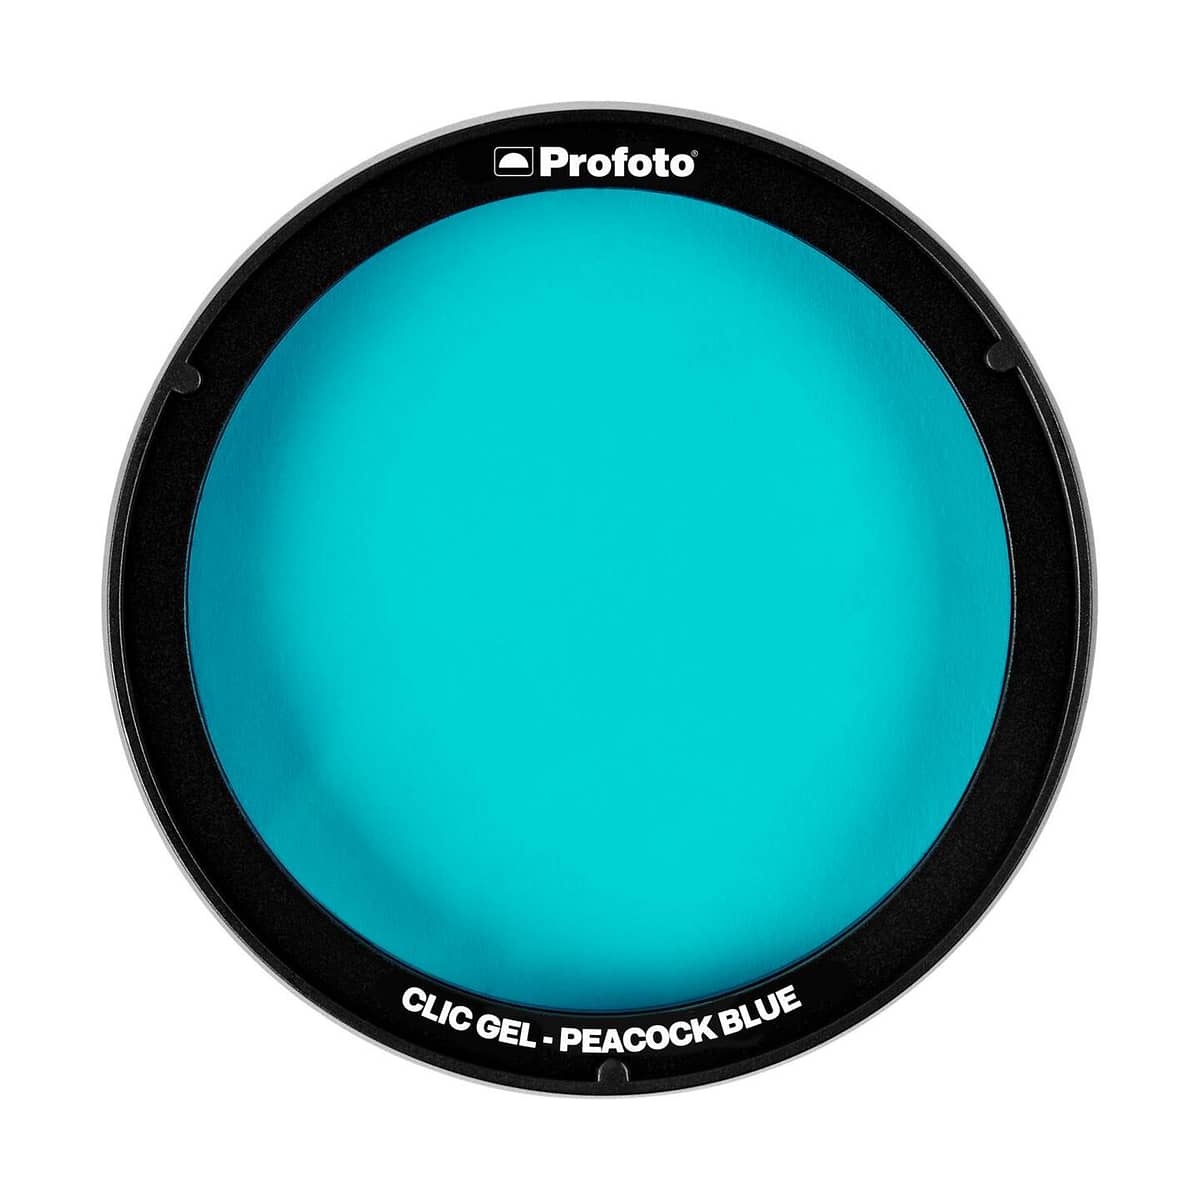 profoto_a1c1_clic_gel_peacock_blue_01